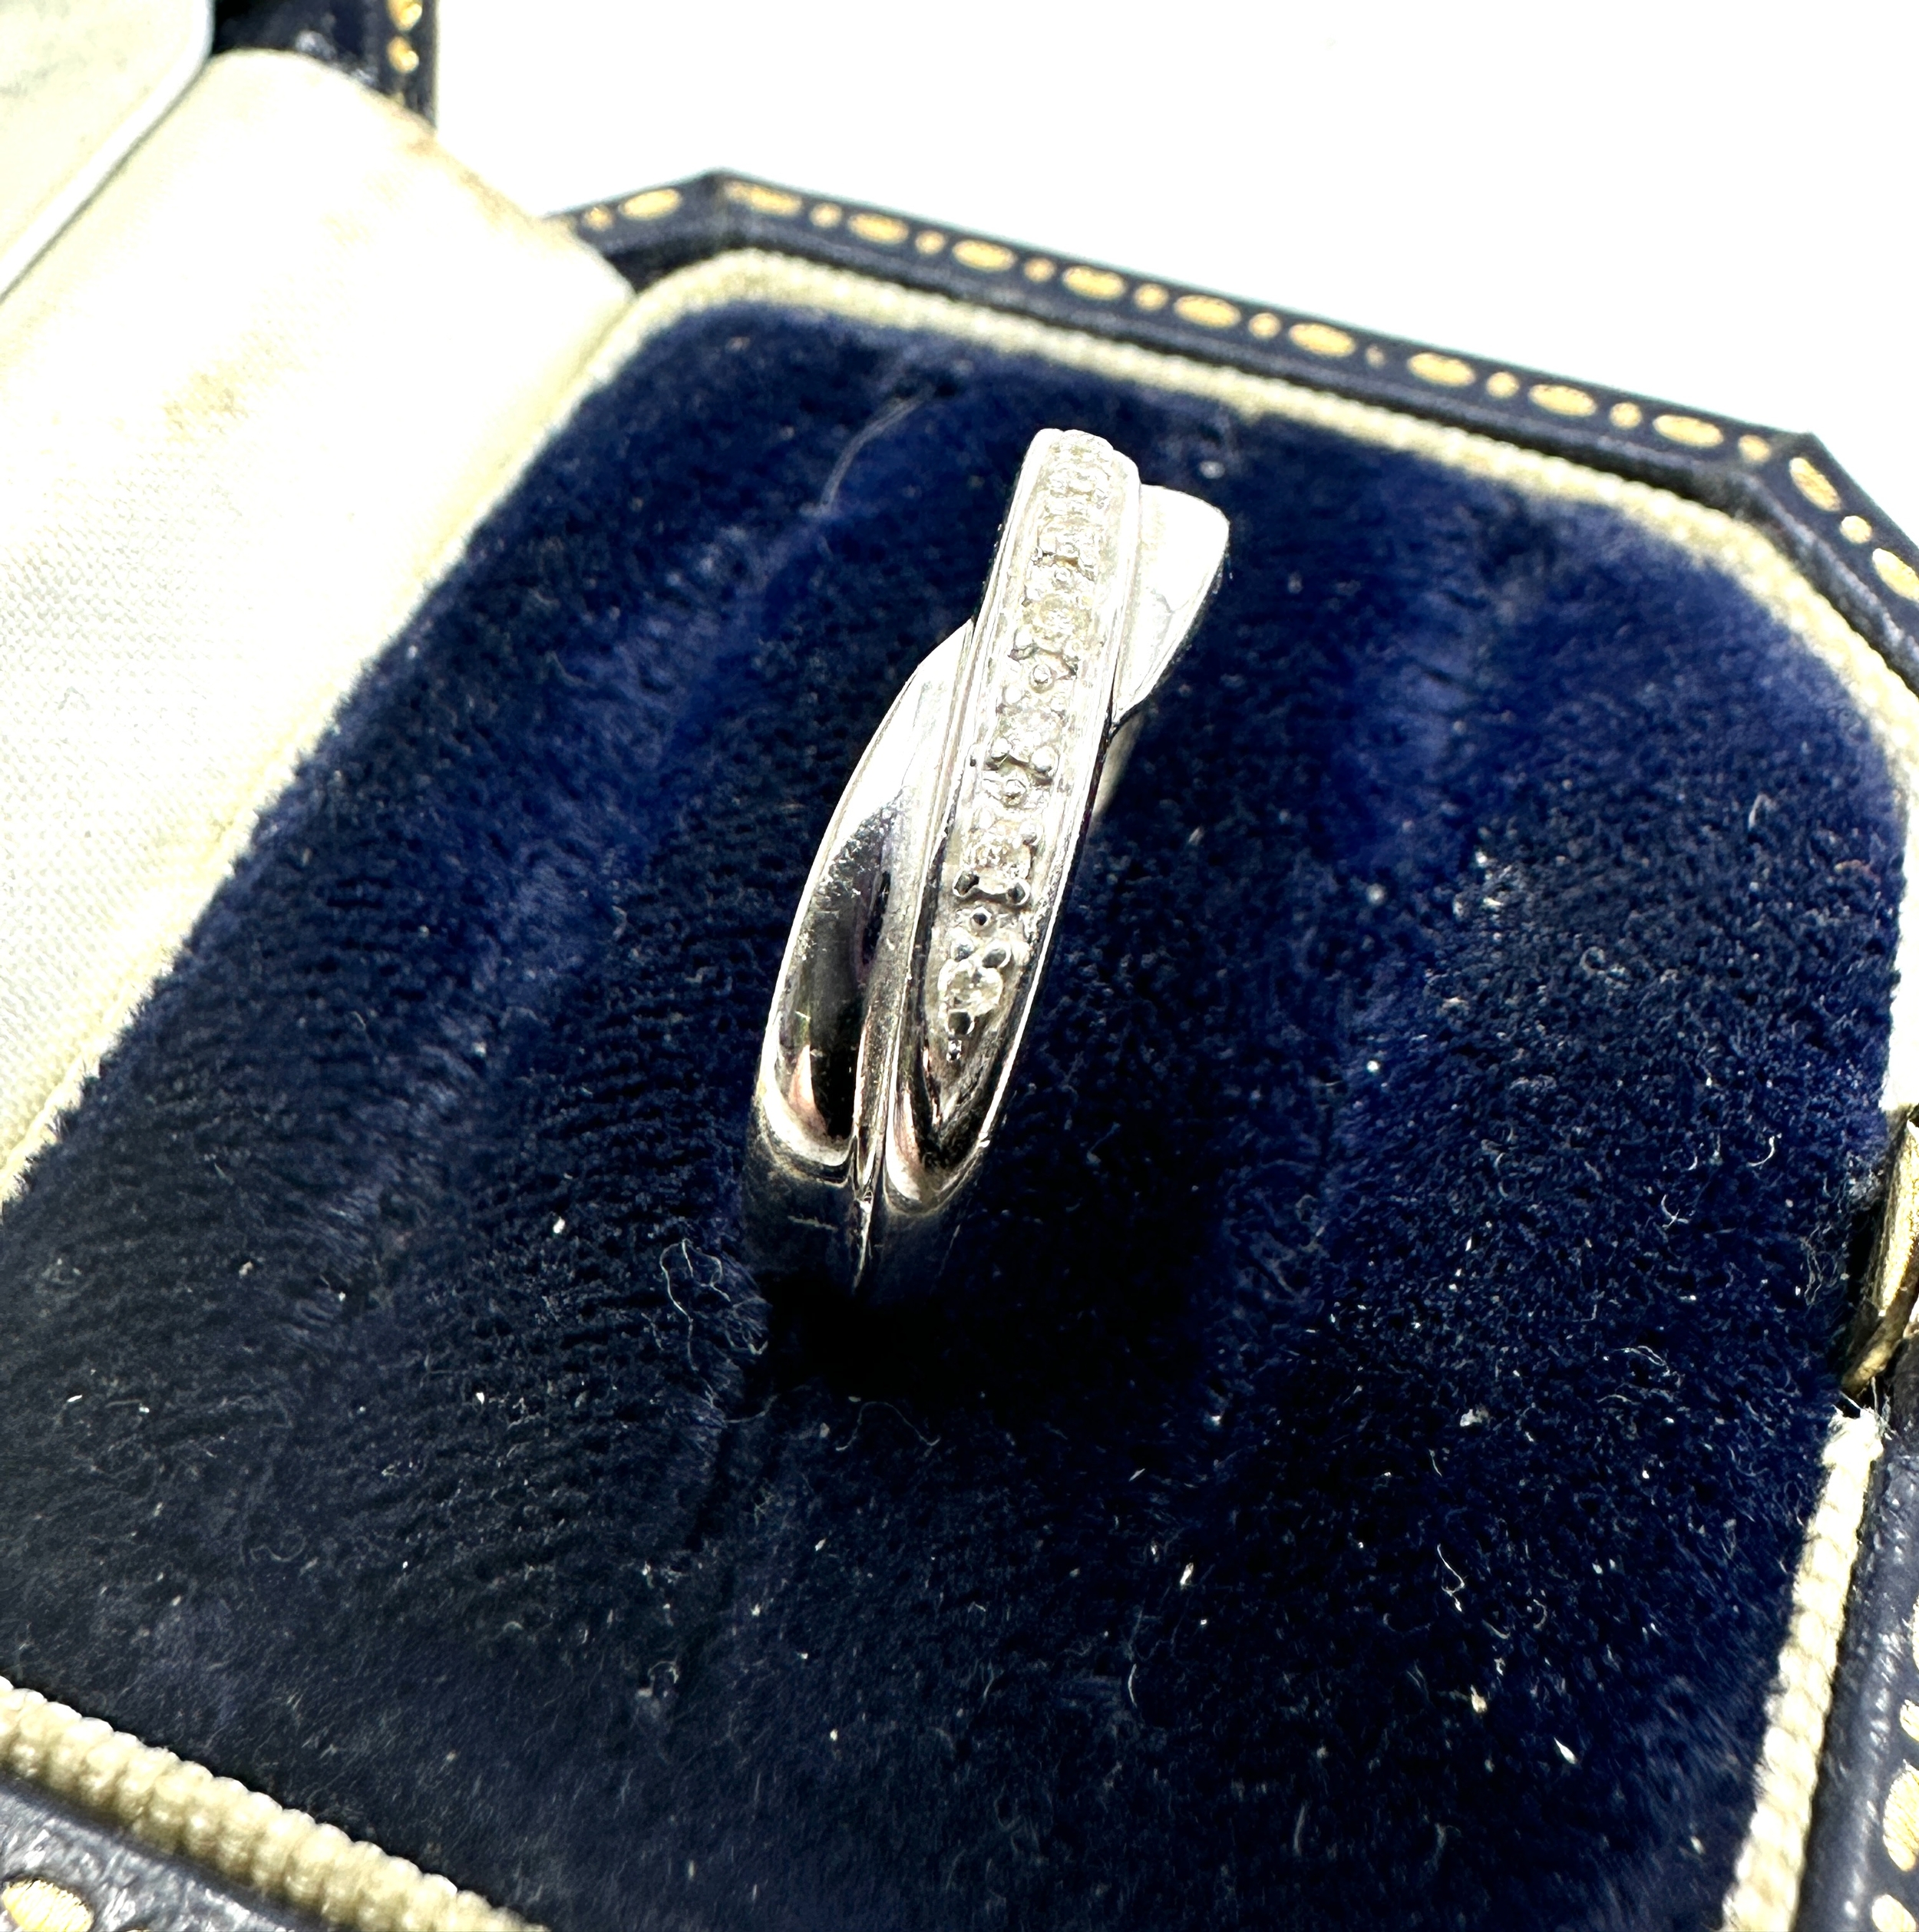 9ct white gold diamond ring weight 2.5g - Image 2 of 4